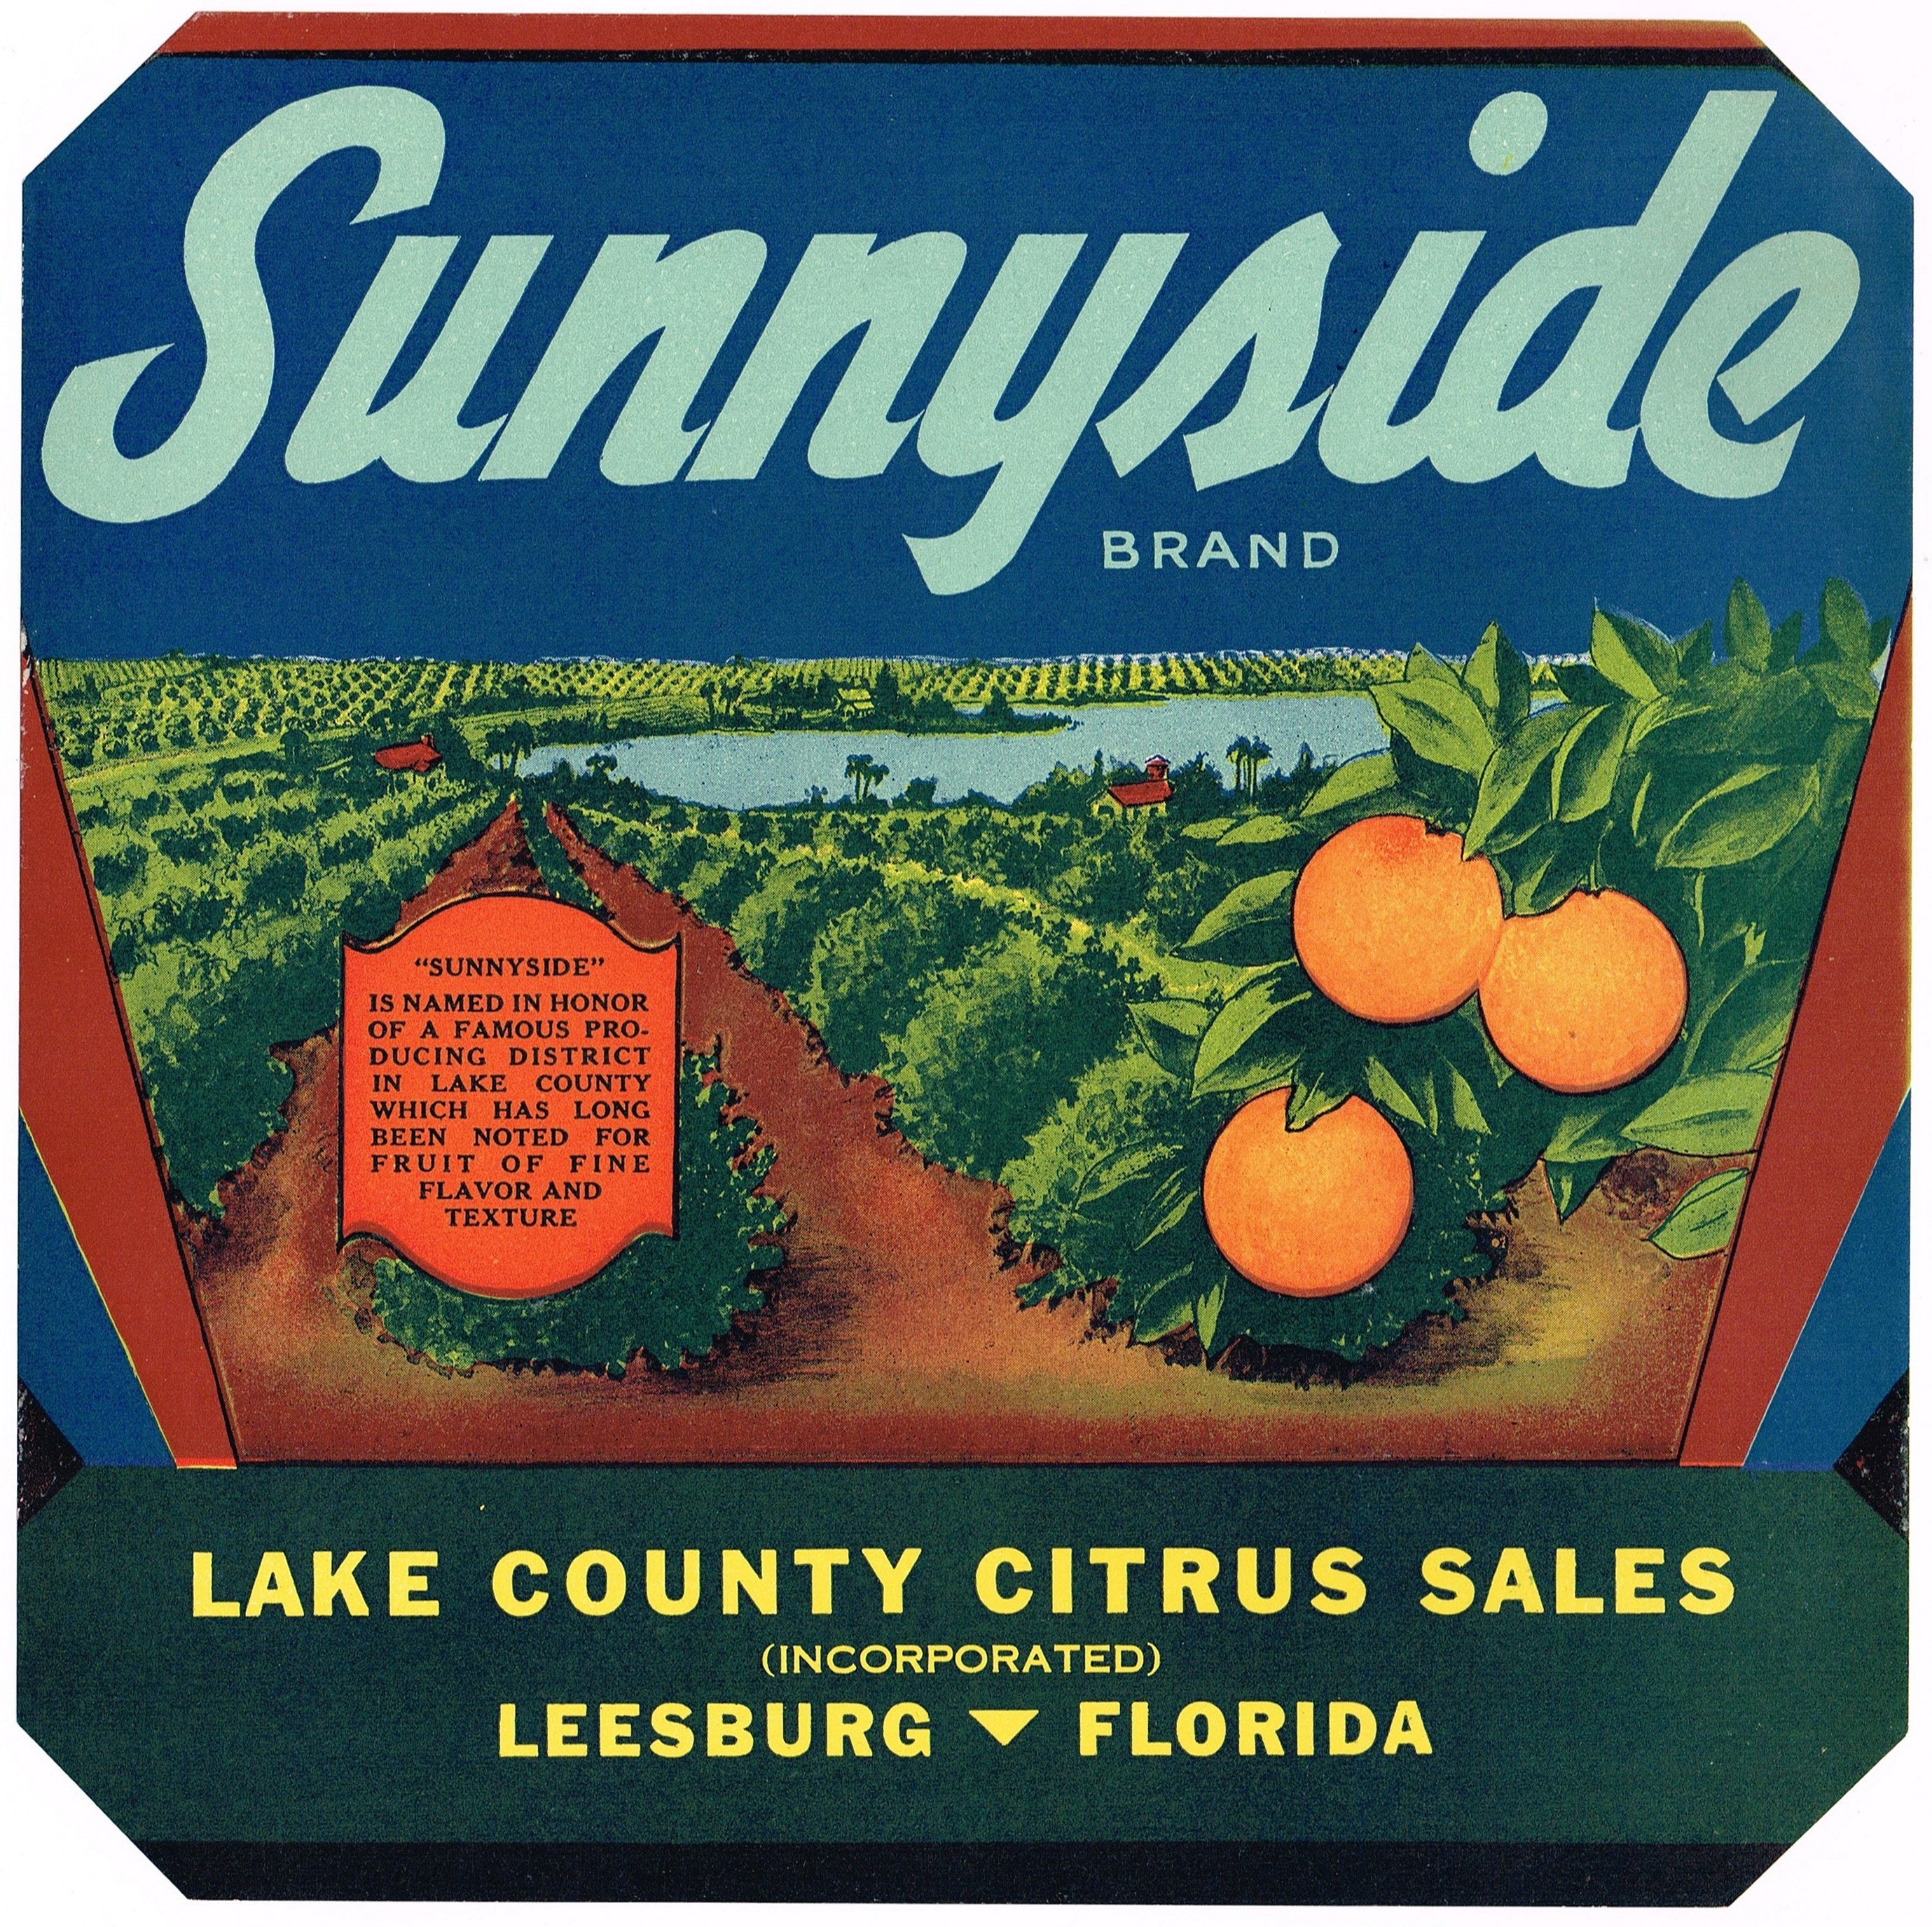 Beach lake groveland carter fruit co. original florida orange crate label 